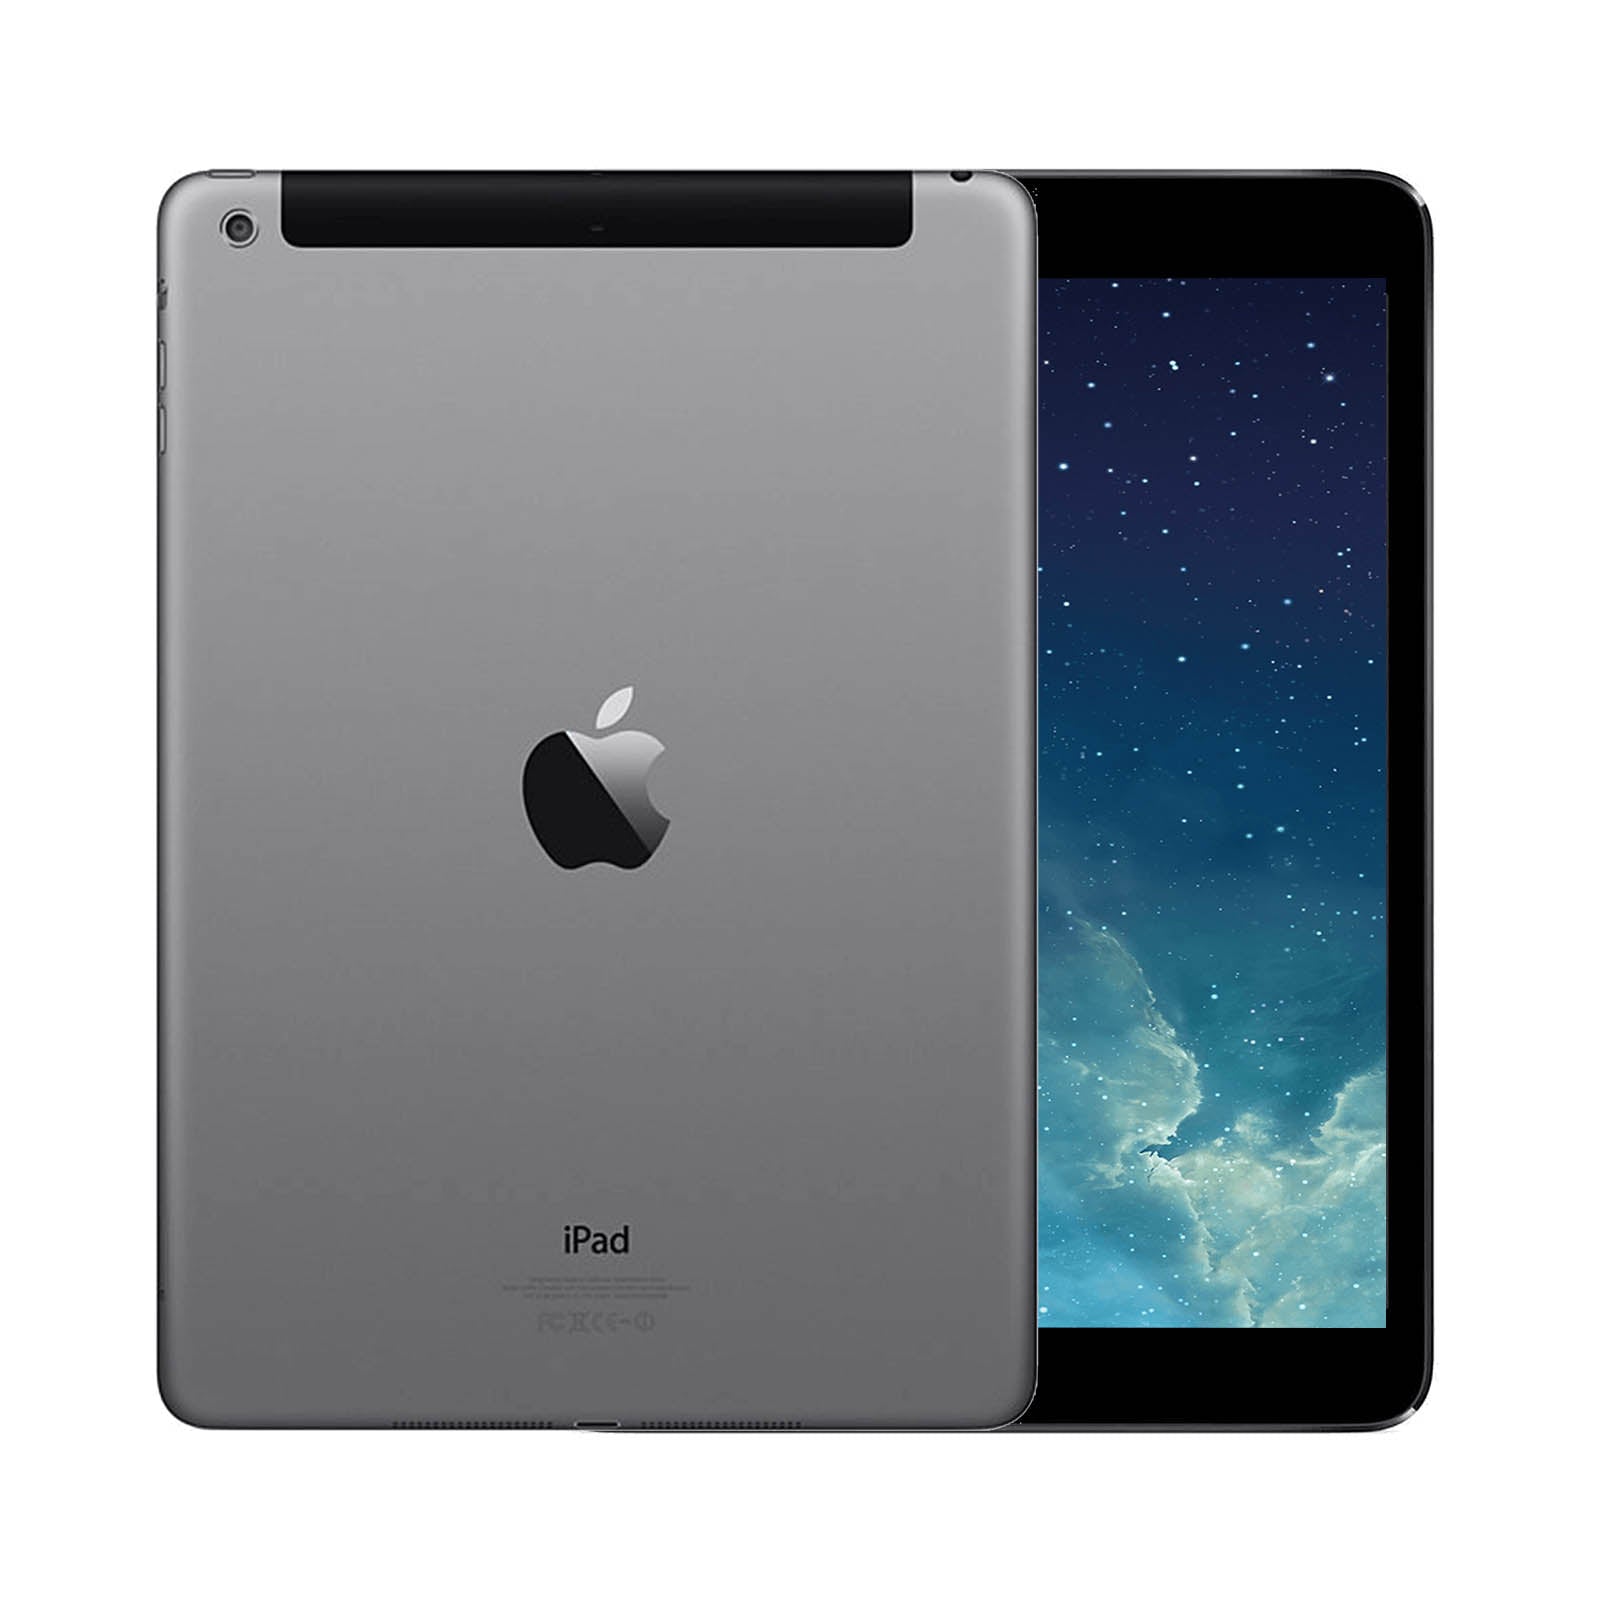 iPad Air 32GB WiFi & Cellular Space Grey Good-Unlocked